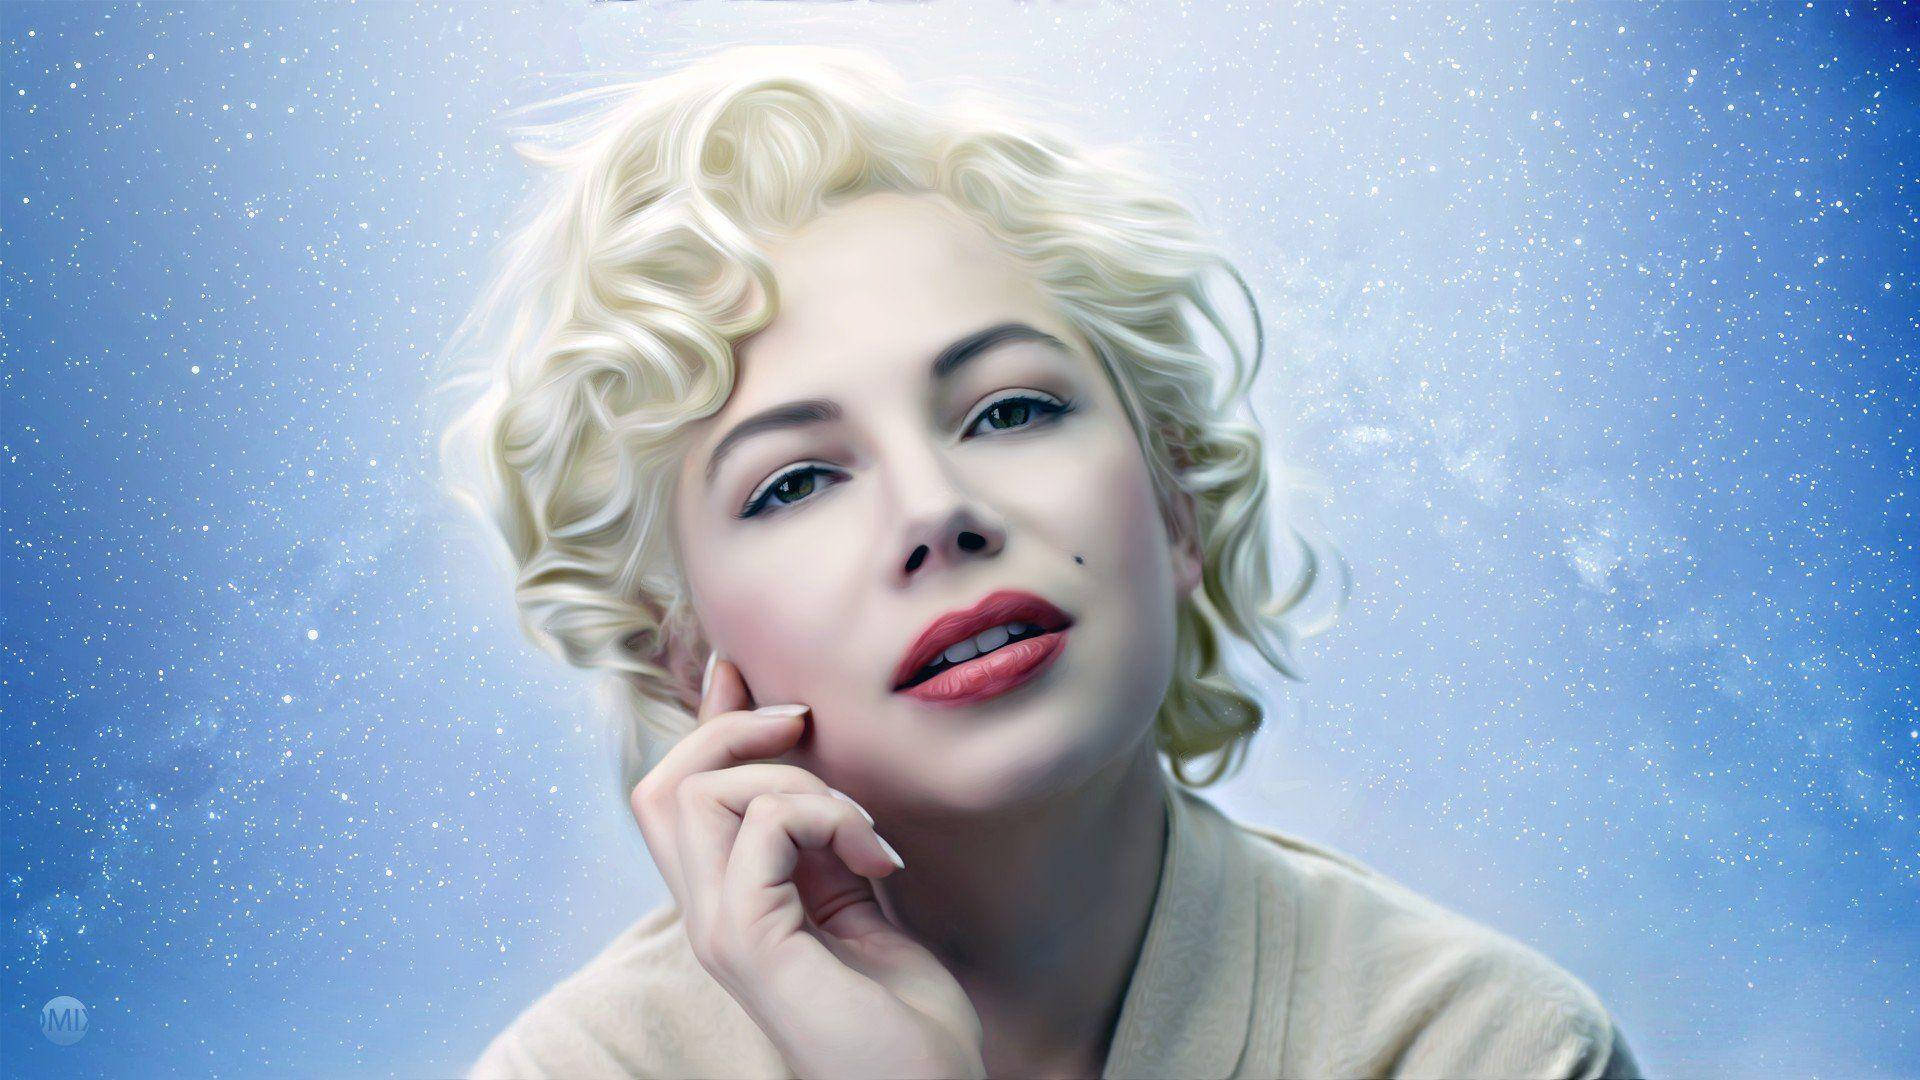 Michellewilliams Als Marilyn Monroe Wallpaper